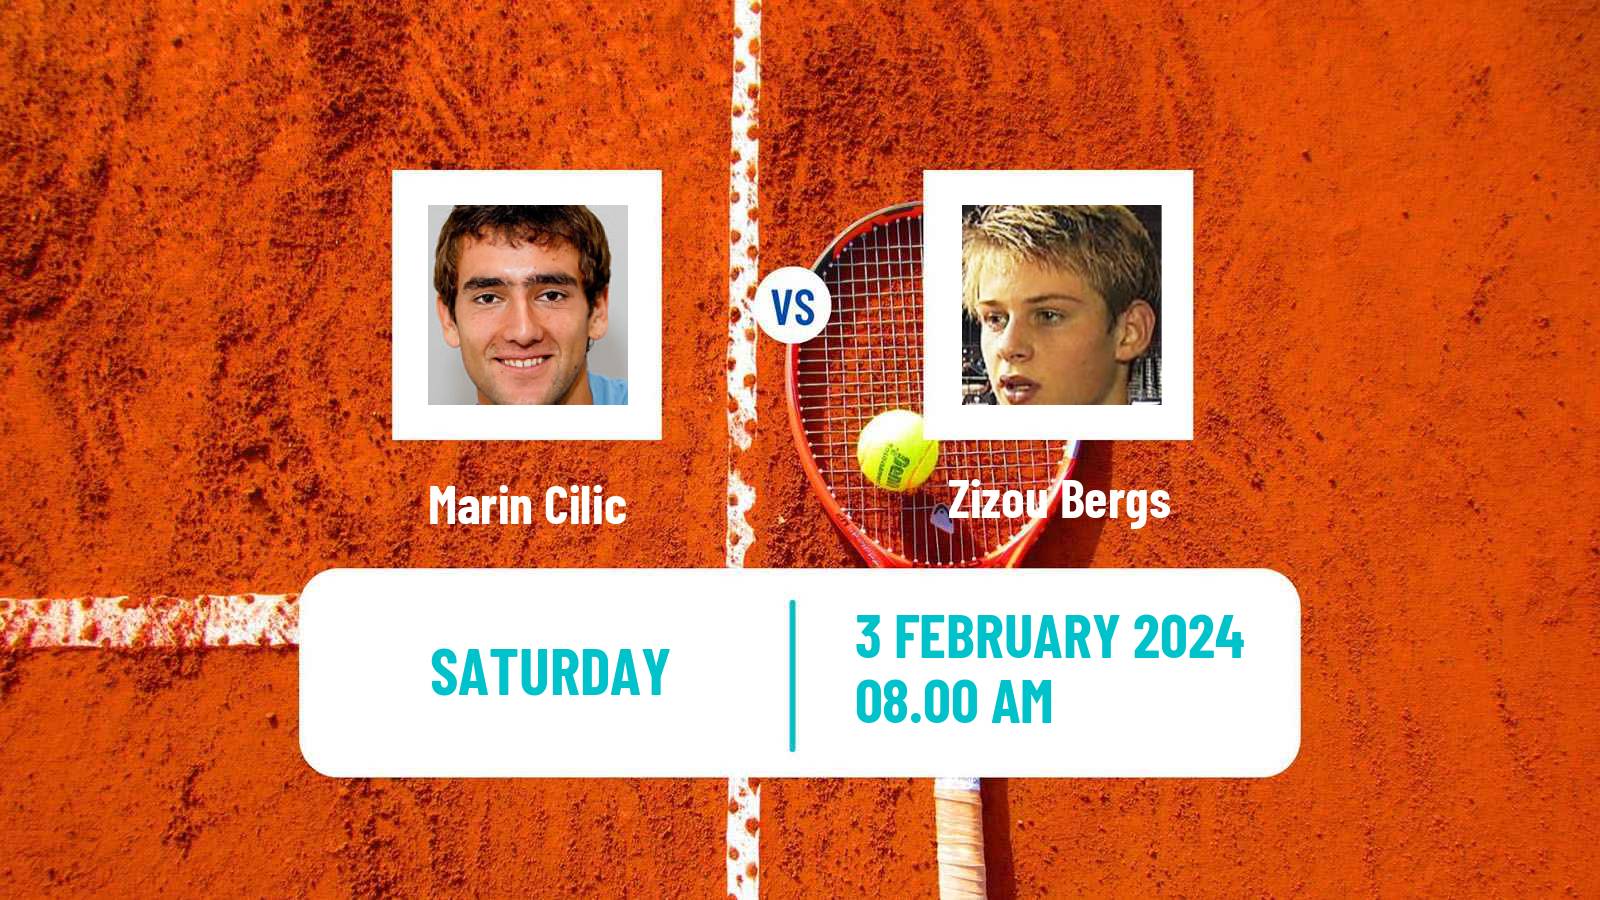 Tennis Davis Cup World Group Marin Cilic - Zizou Bergs